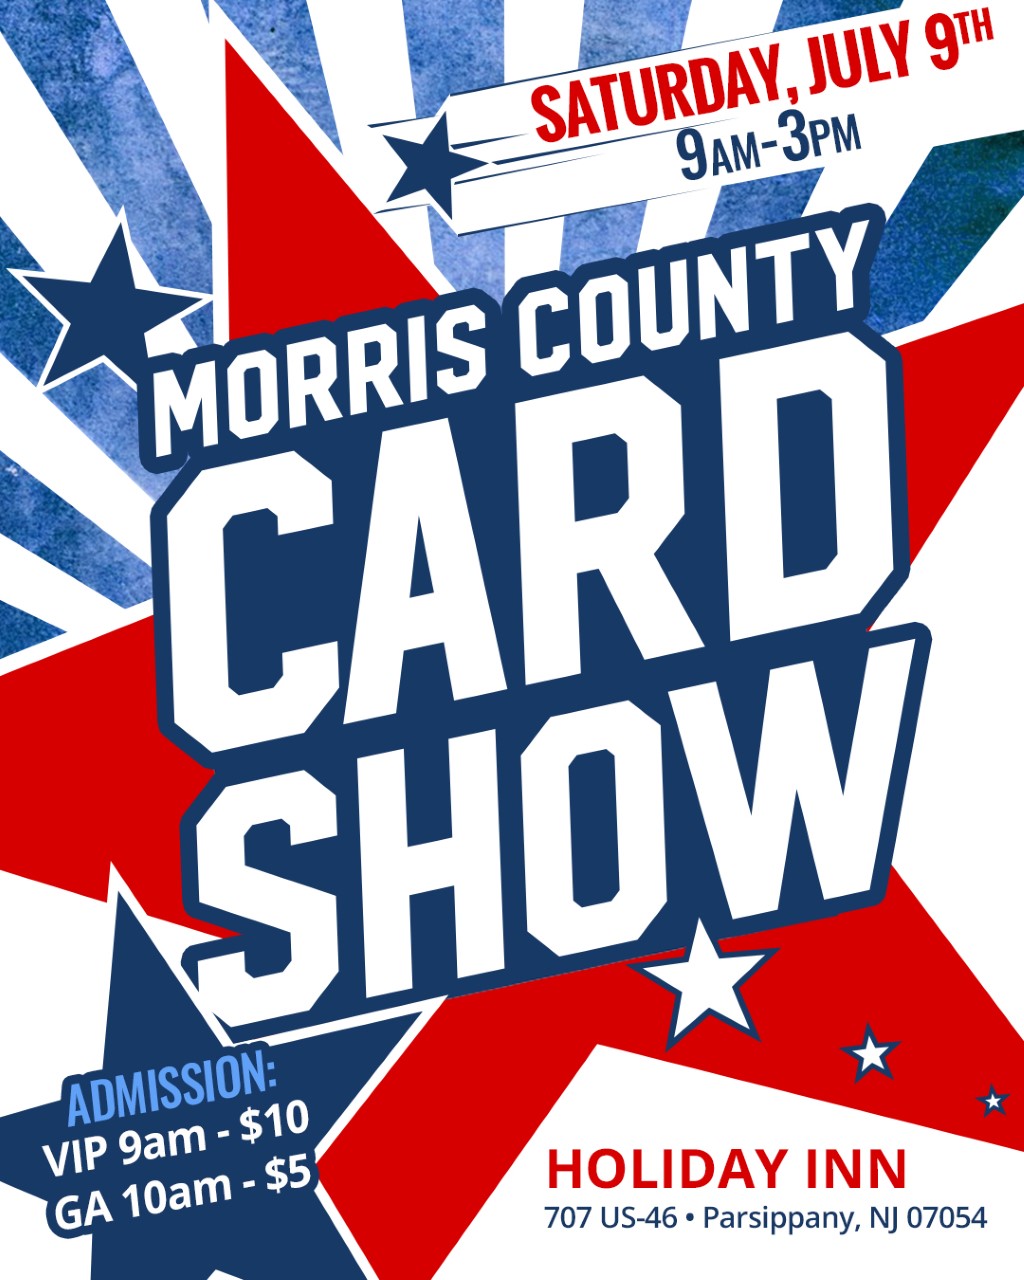 Morris County Card Show